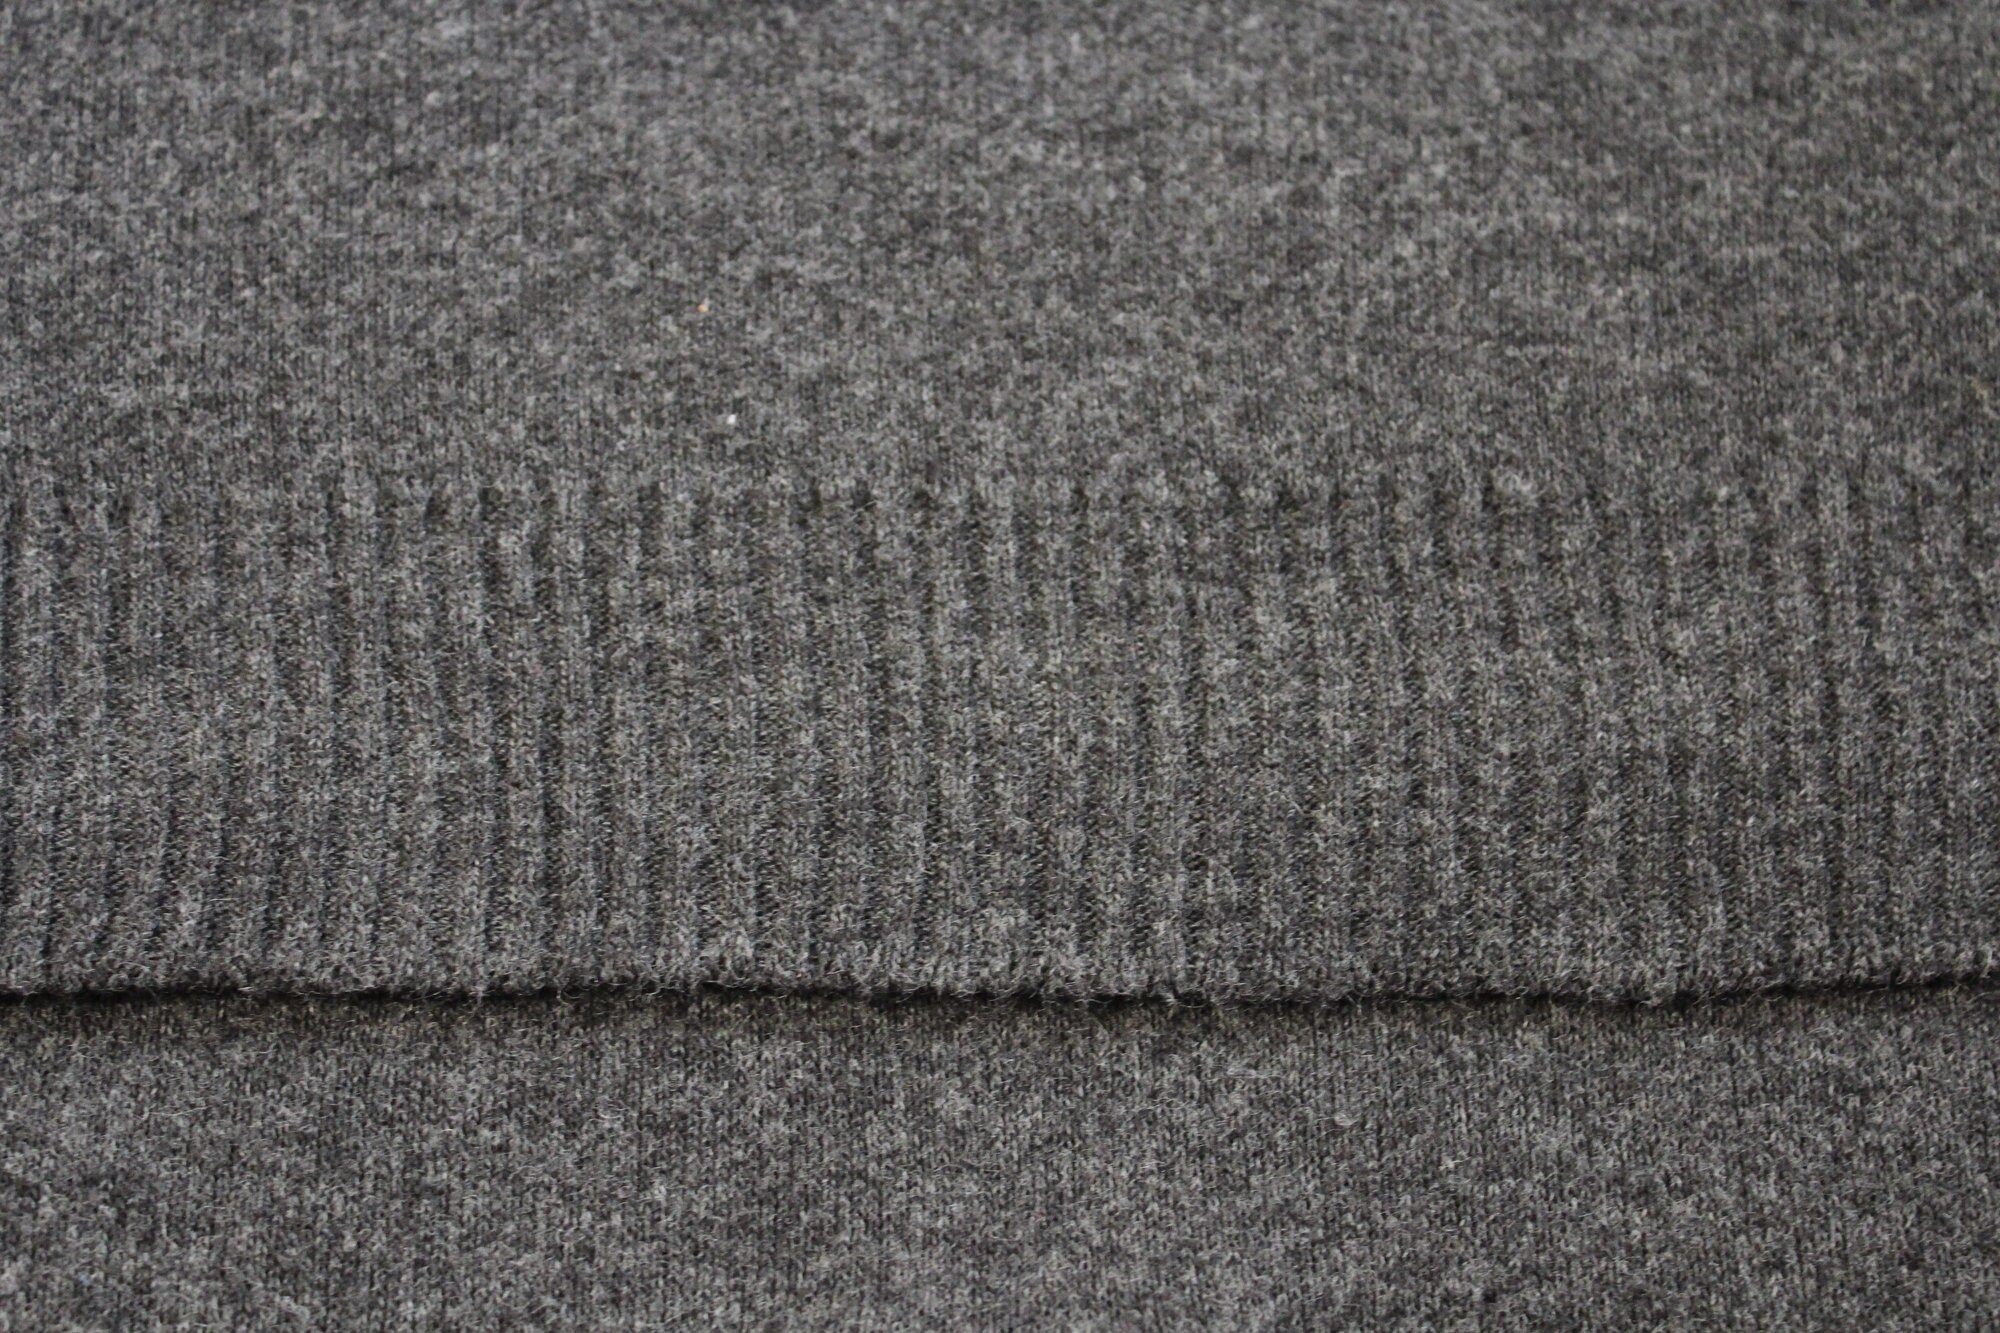 Vintage Sweater Collard Sweater by Pilgrim 60s 70s / | Etsy